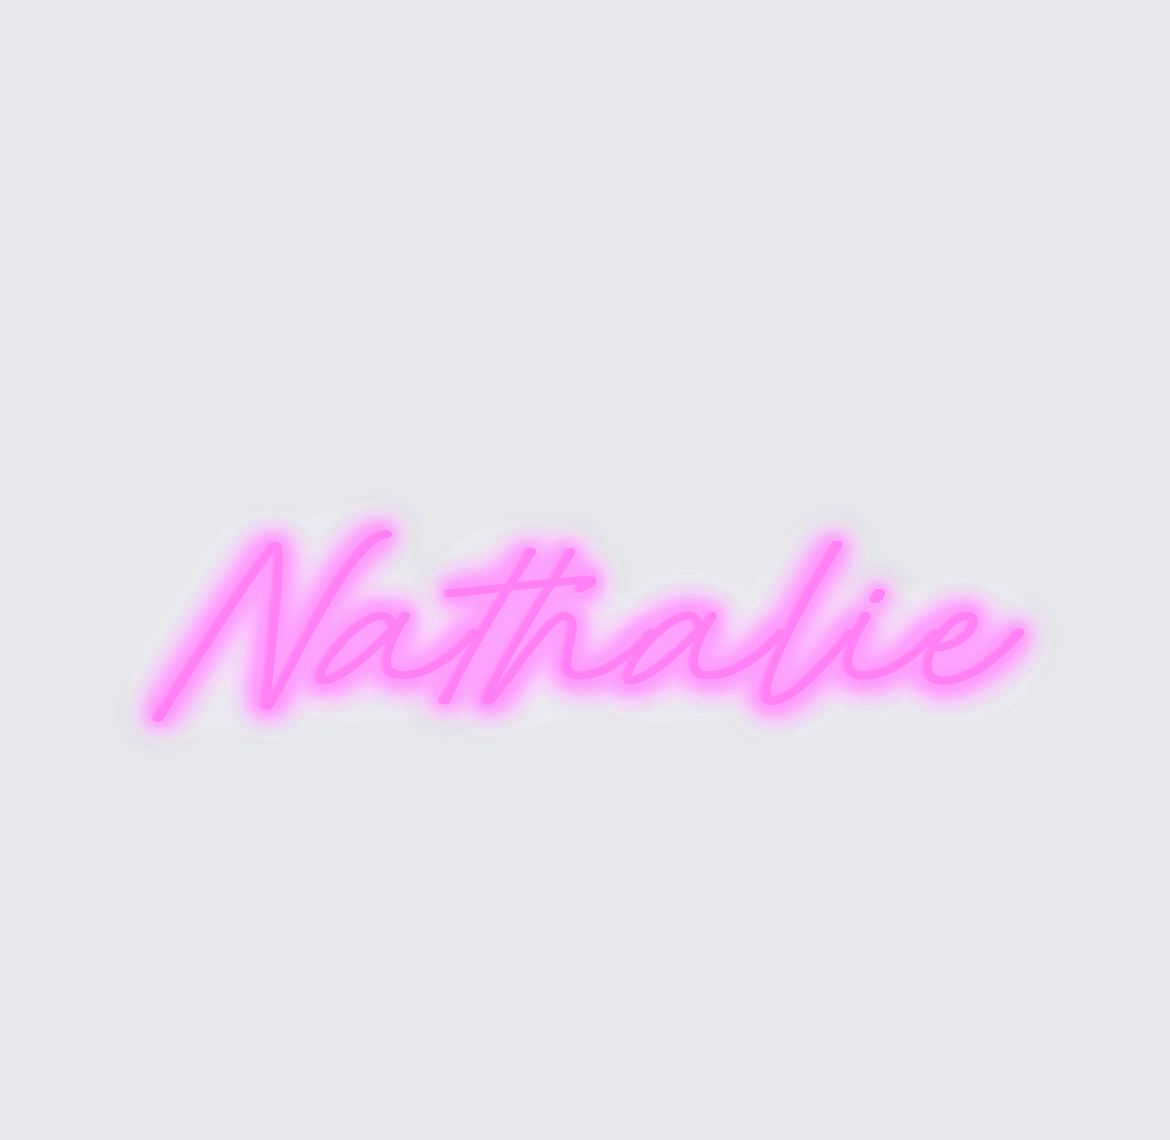 Custom neon sign - Nathalie